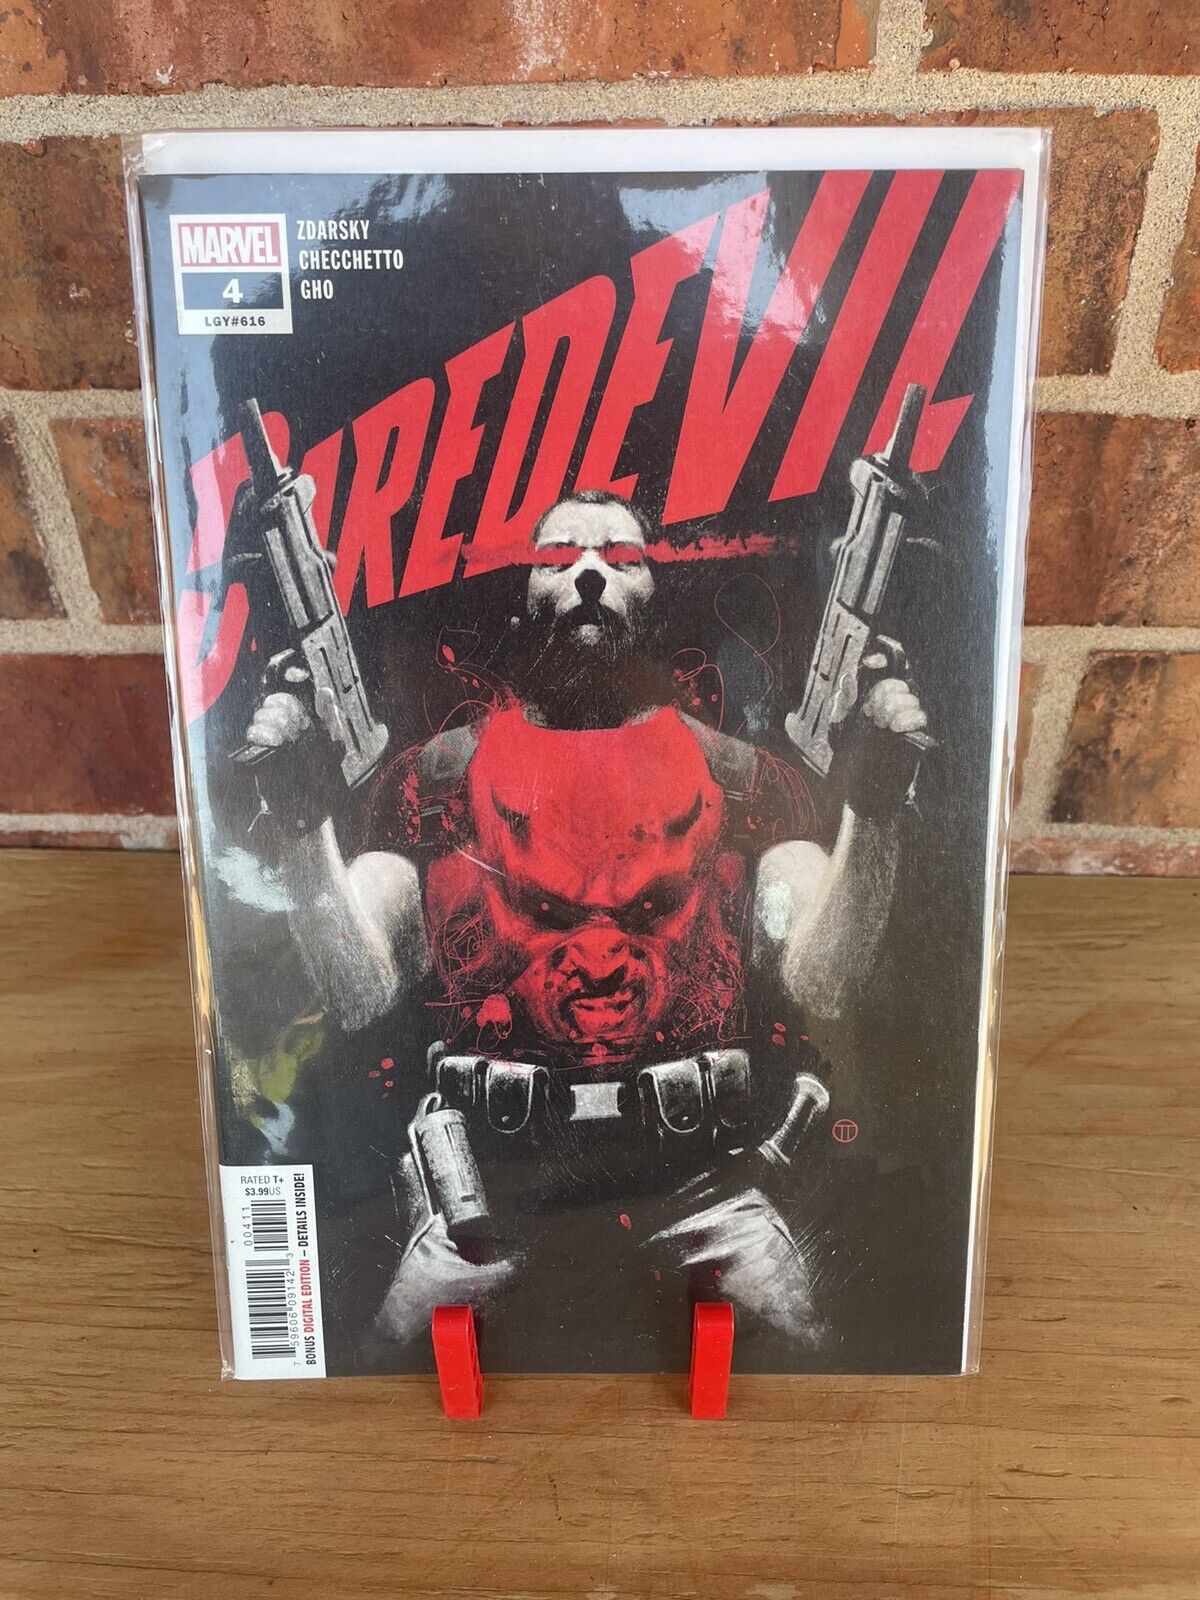 Daredevil #4 (Legacy #616), Marvel, 2019⭐️DD in Punisher Shirt⭐️Chip Zdarsky⭐️NM